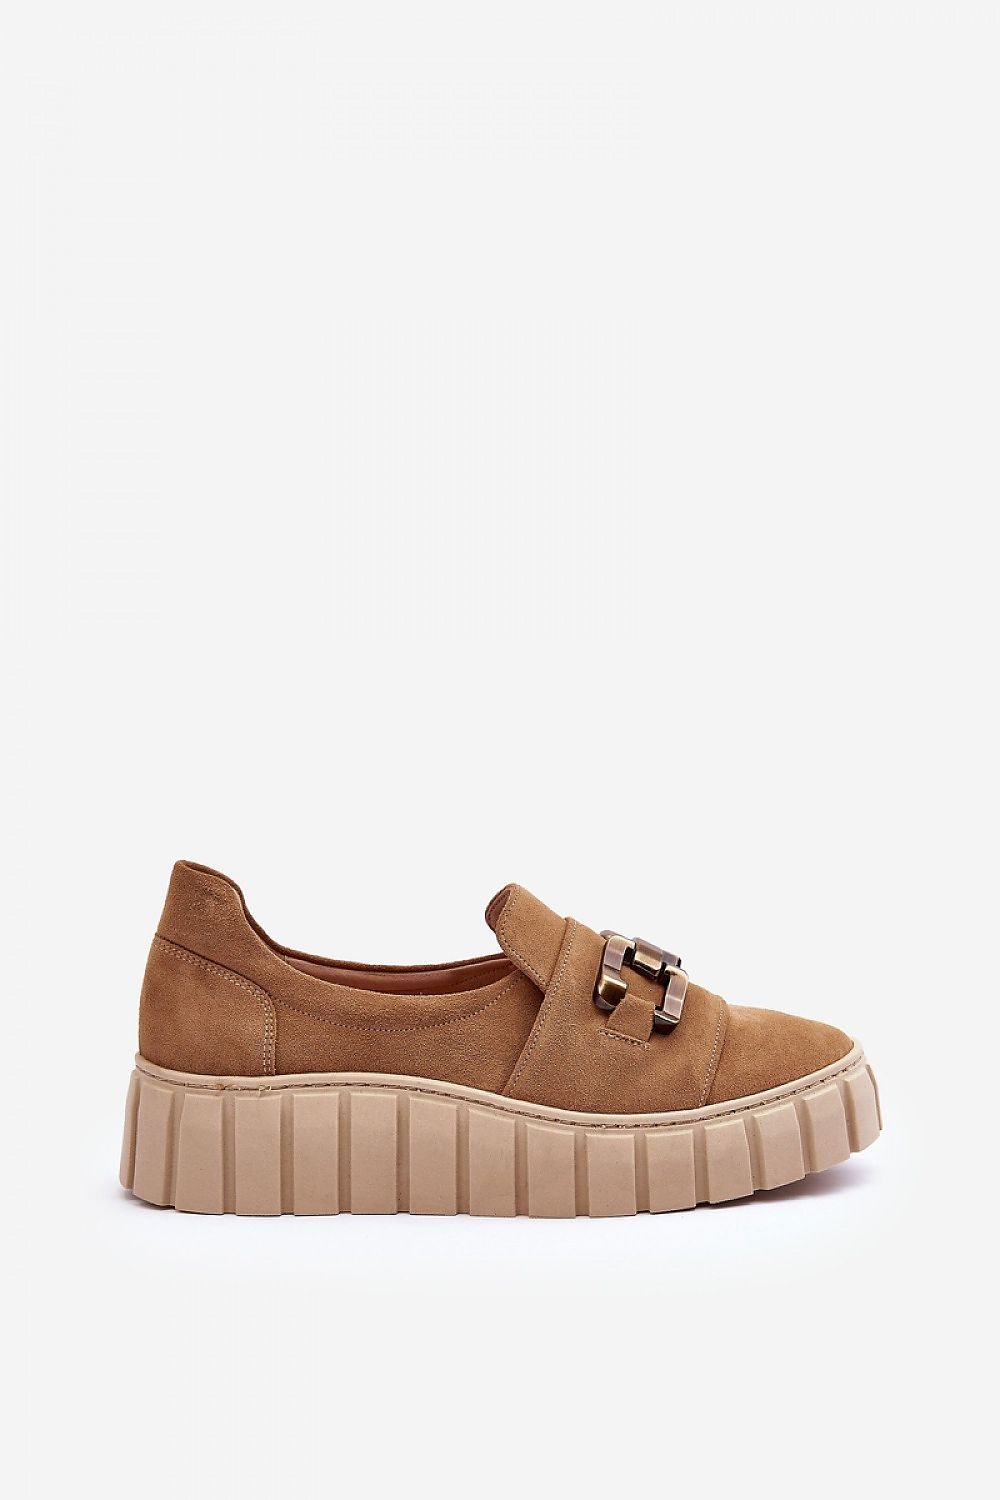 TEEK - Link Textured Platform Textured Loafer Shoes SHOES TEEK MH brown 6 